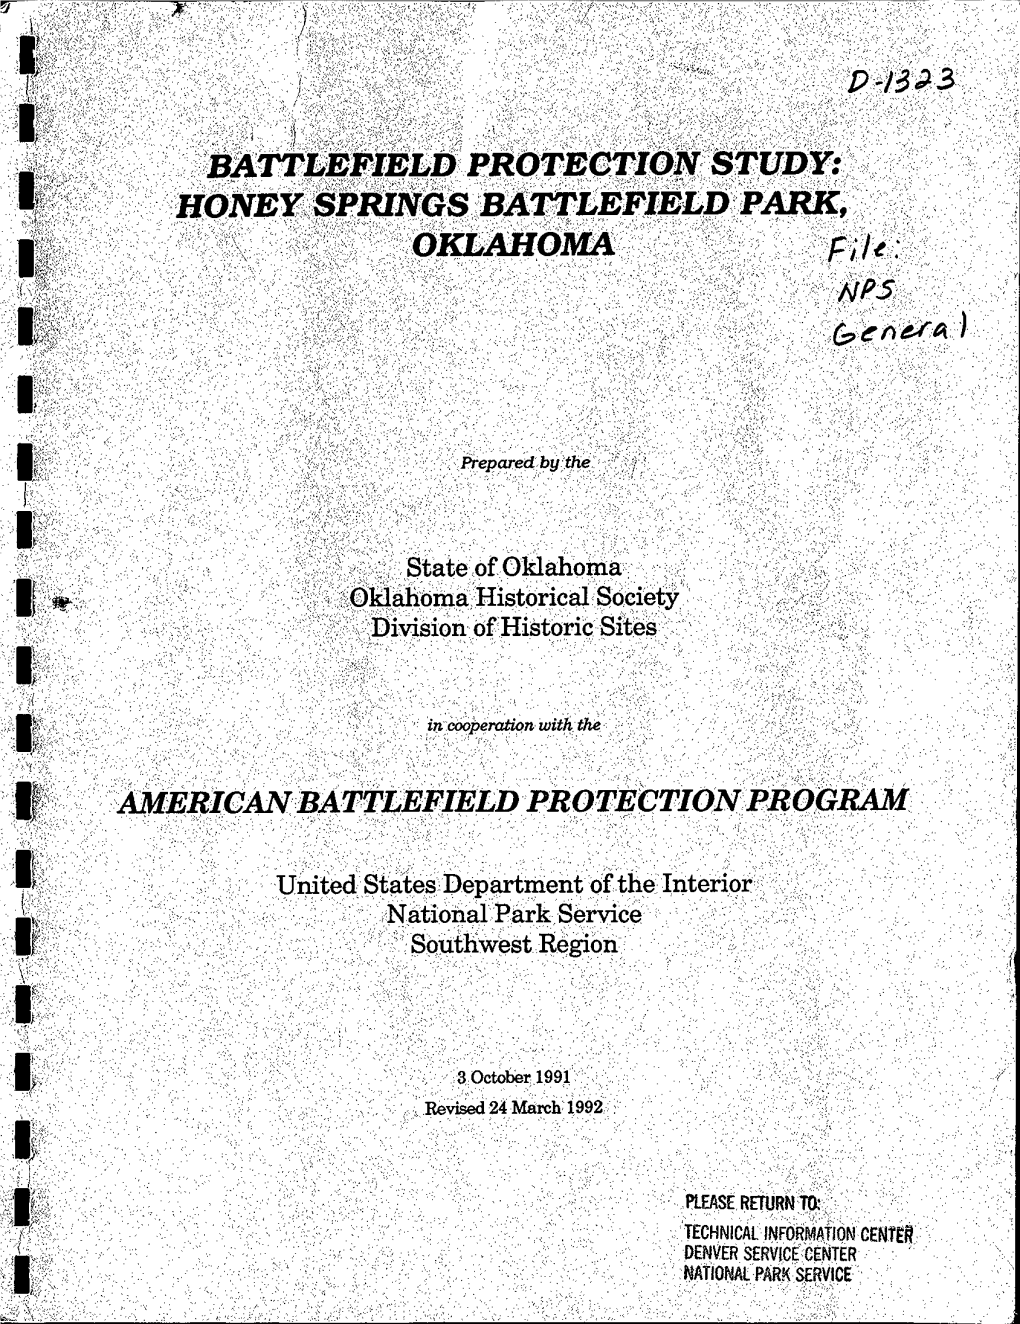 Battlefield Protection Study: Honey Springs Battlefield Park, Oklahoma